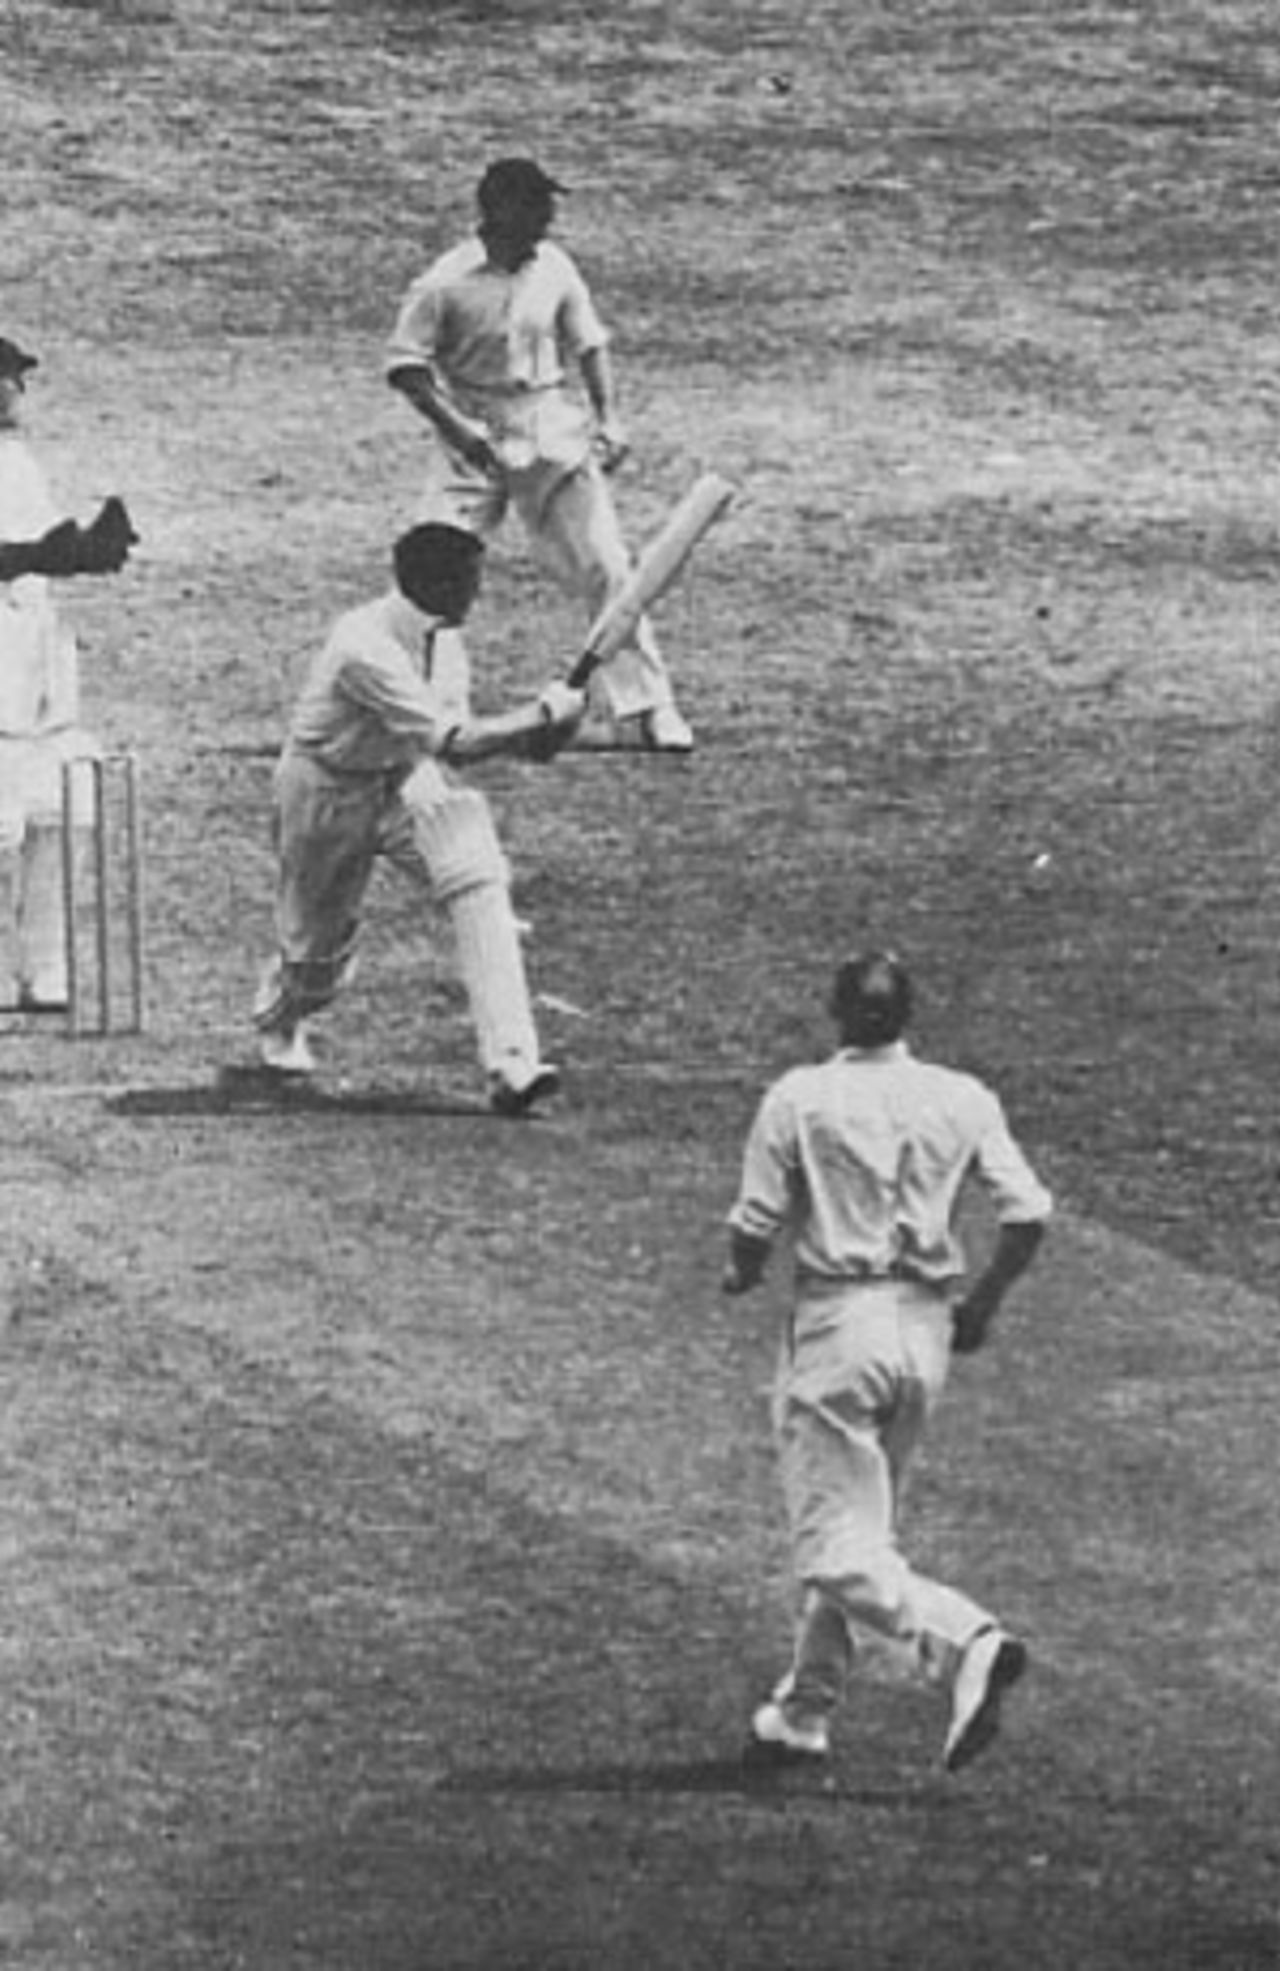 Arthur Wellard hits Bill O'Reilly for a boundary, England v Australia, Lord's, 1938